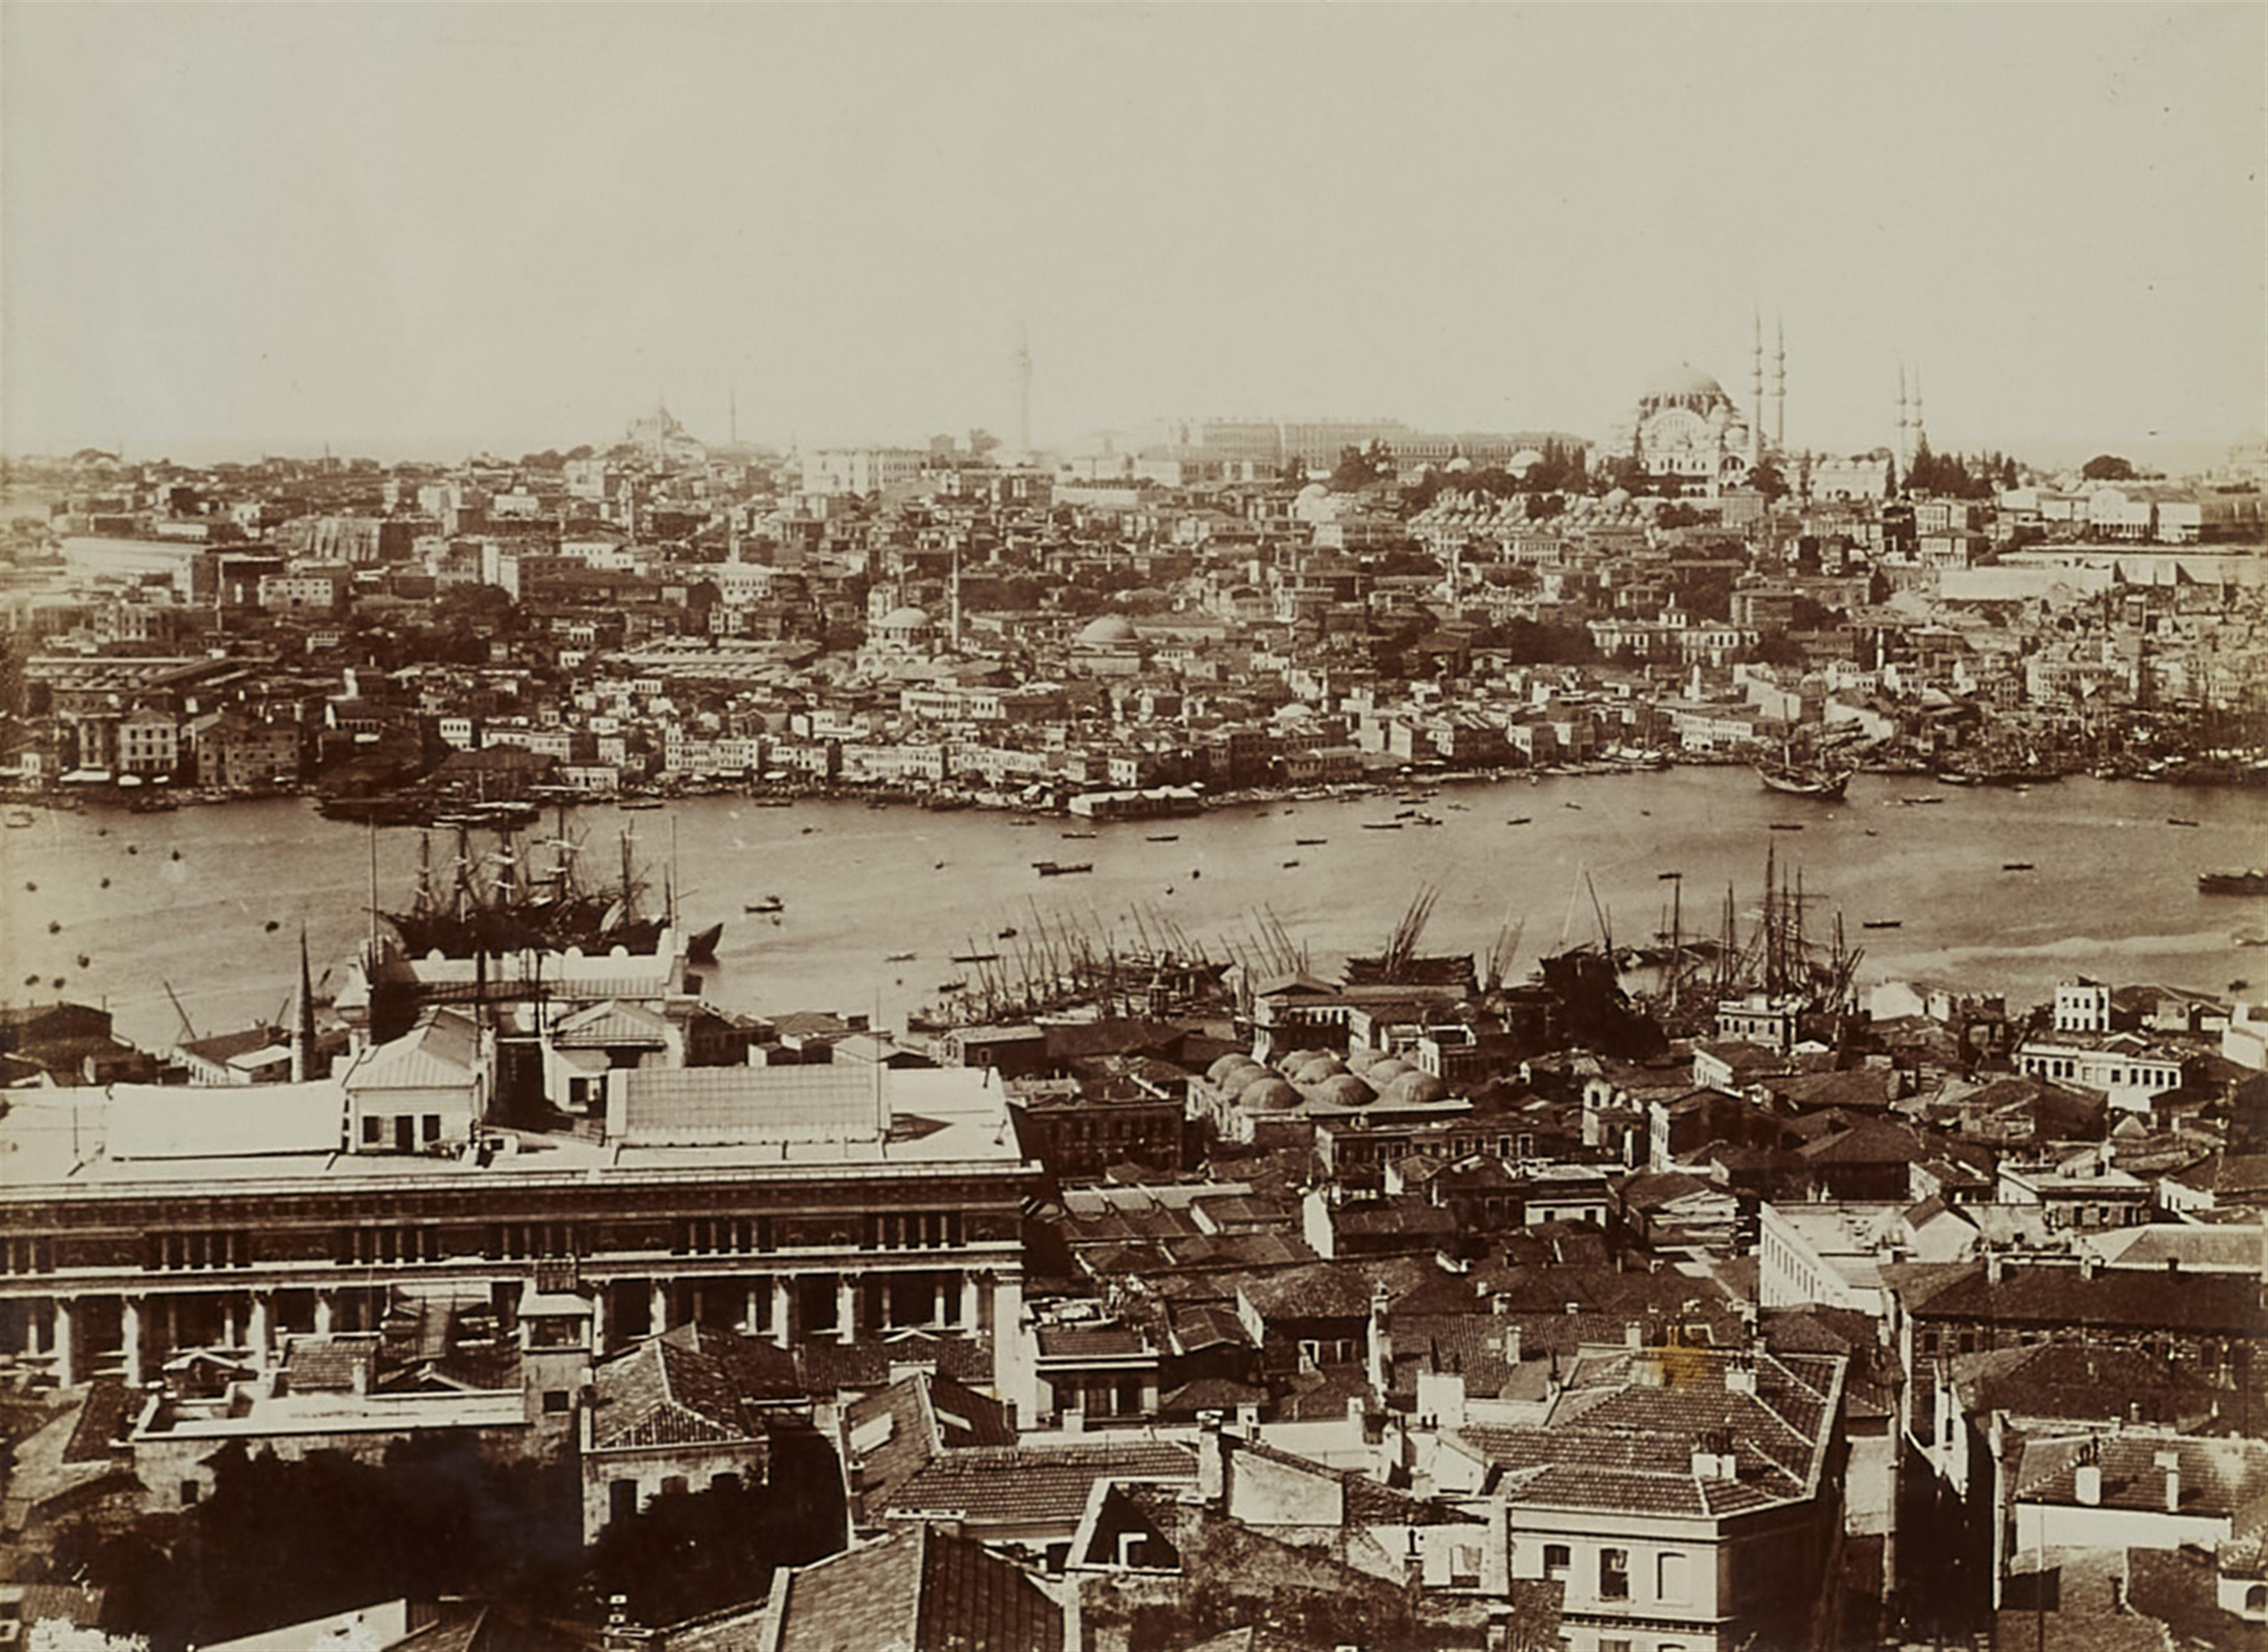 Jean Pascal Sébah - Panorama von Konstantinopel aufgenommen vom Galata-Turm - image-6